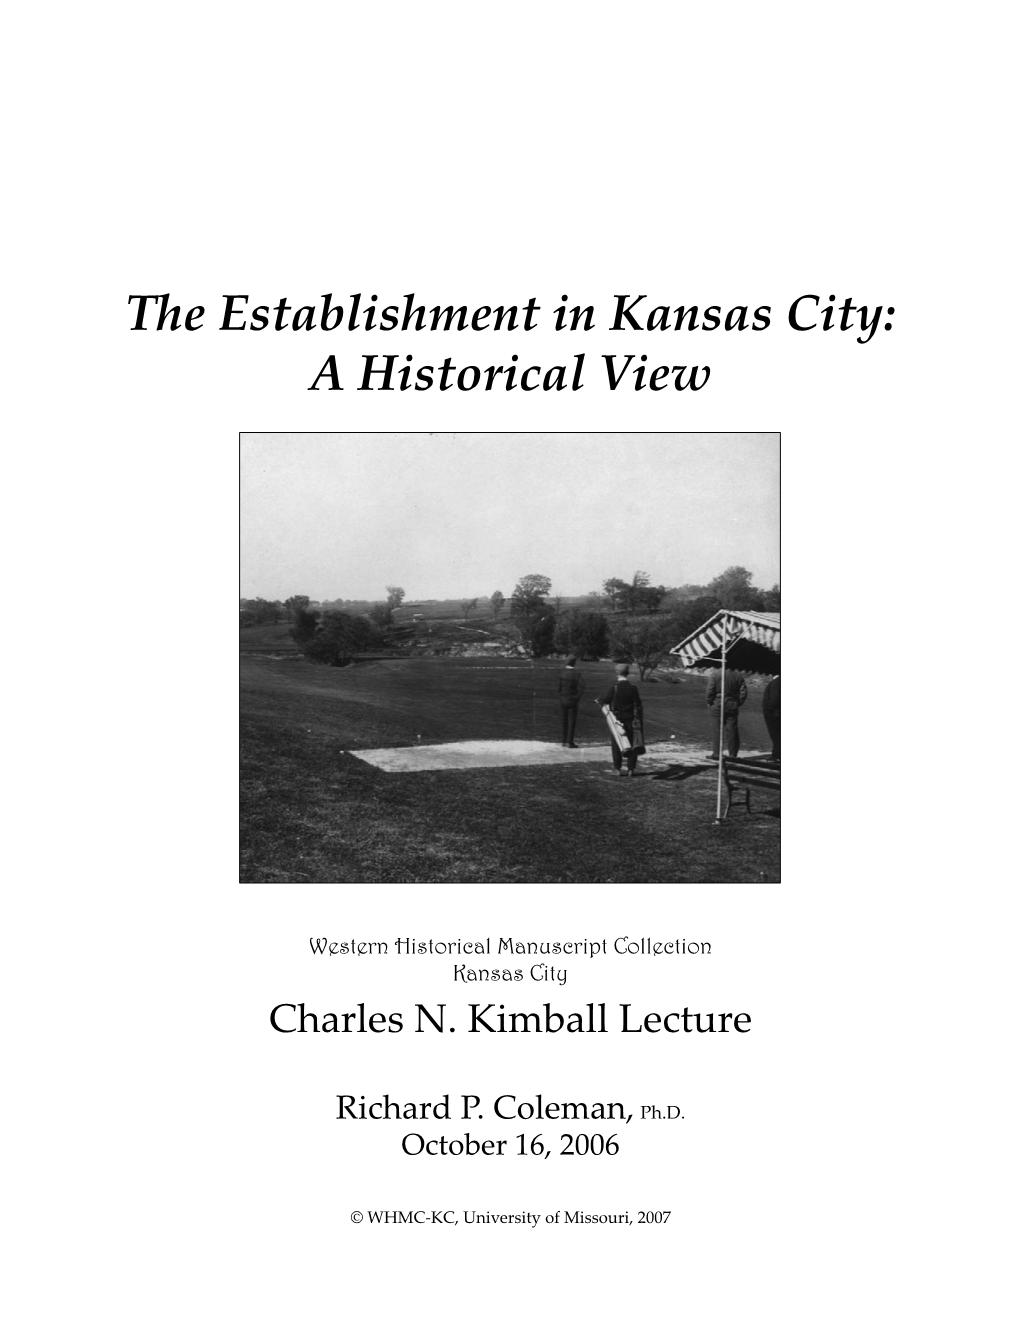 The Establishment in Kansas City: a Historical View